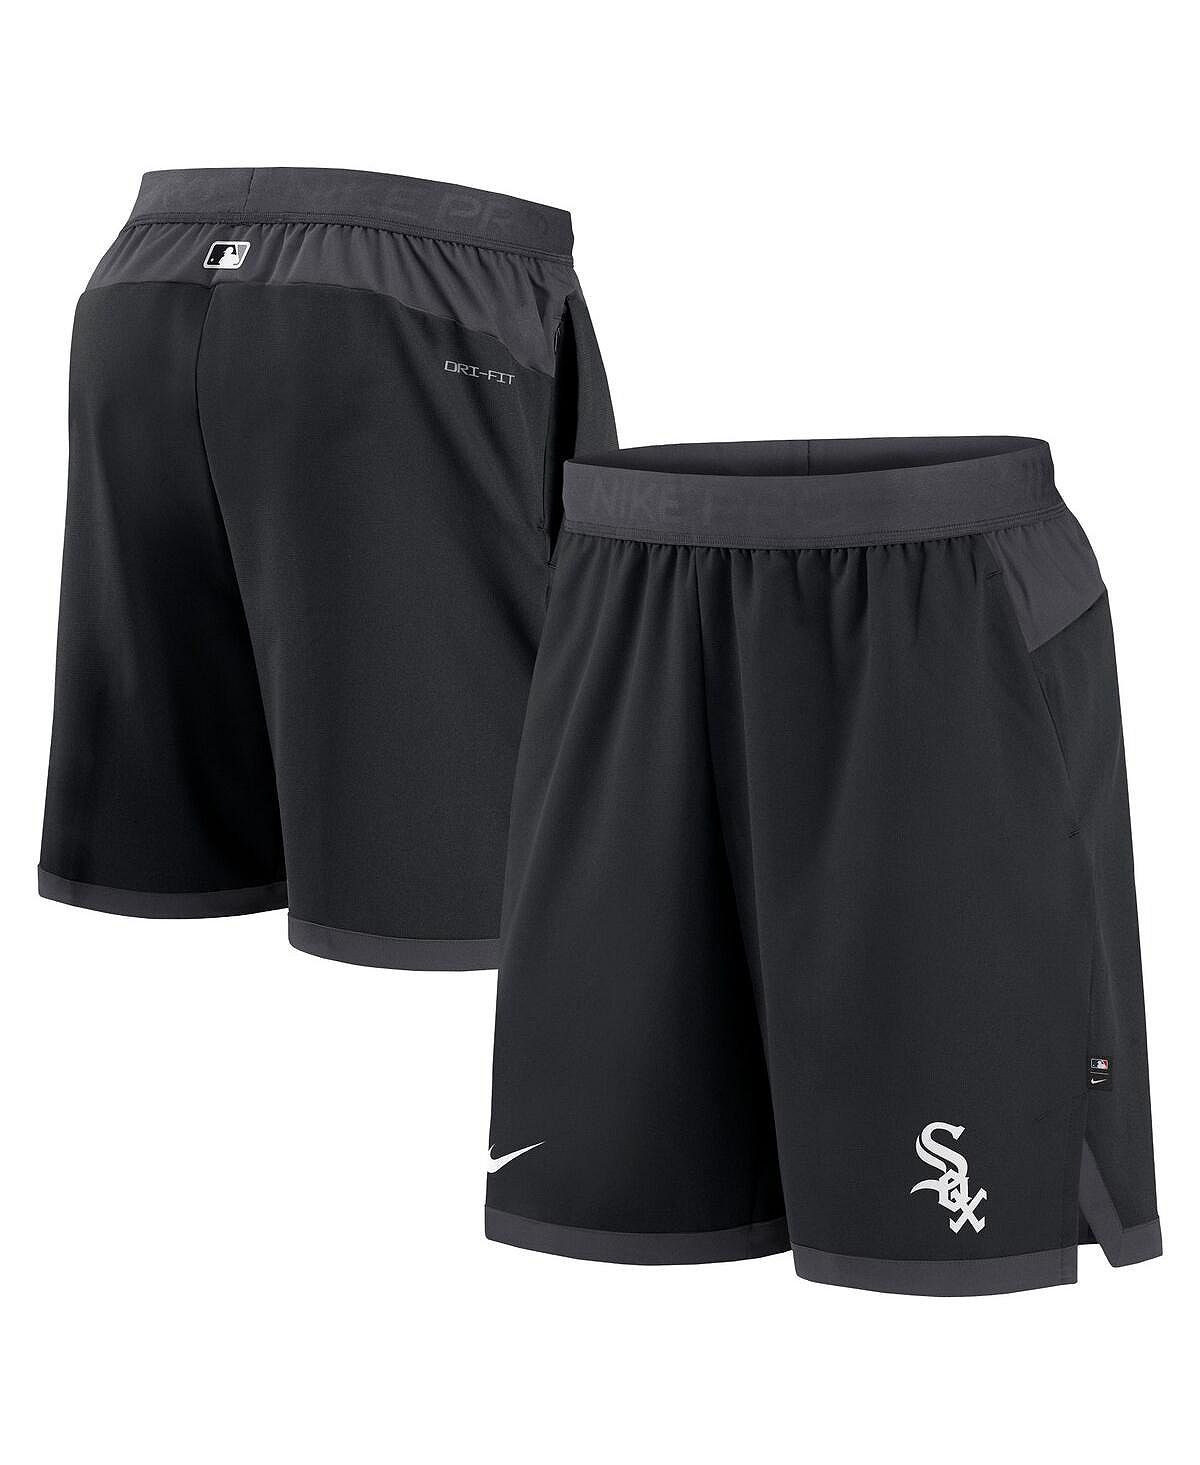 Мужские черные шорты Chicago White Sox Authentic Collection Flex Vent Performance Nike носки nike fc barcelona snkr sox размер 34 38